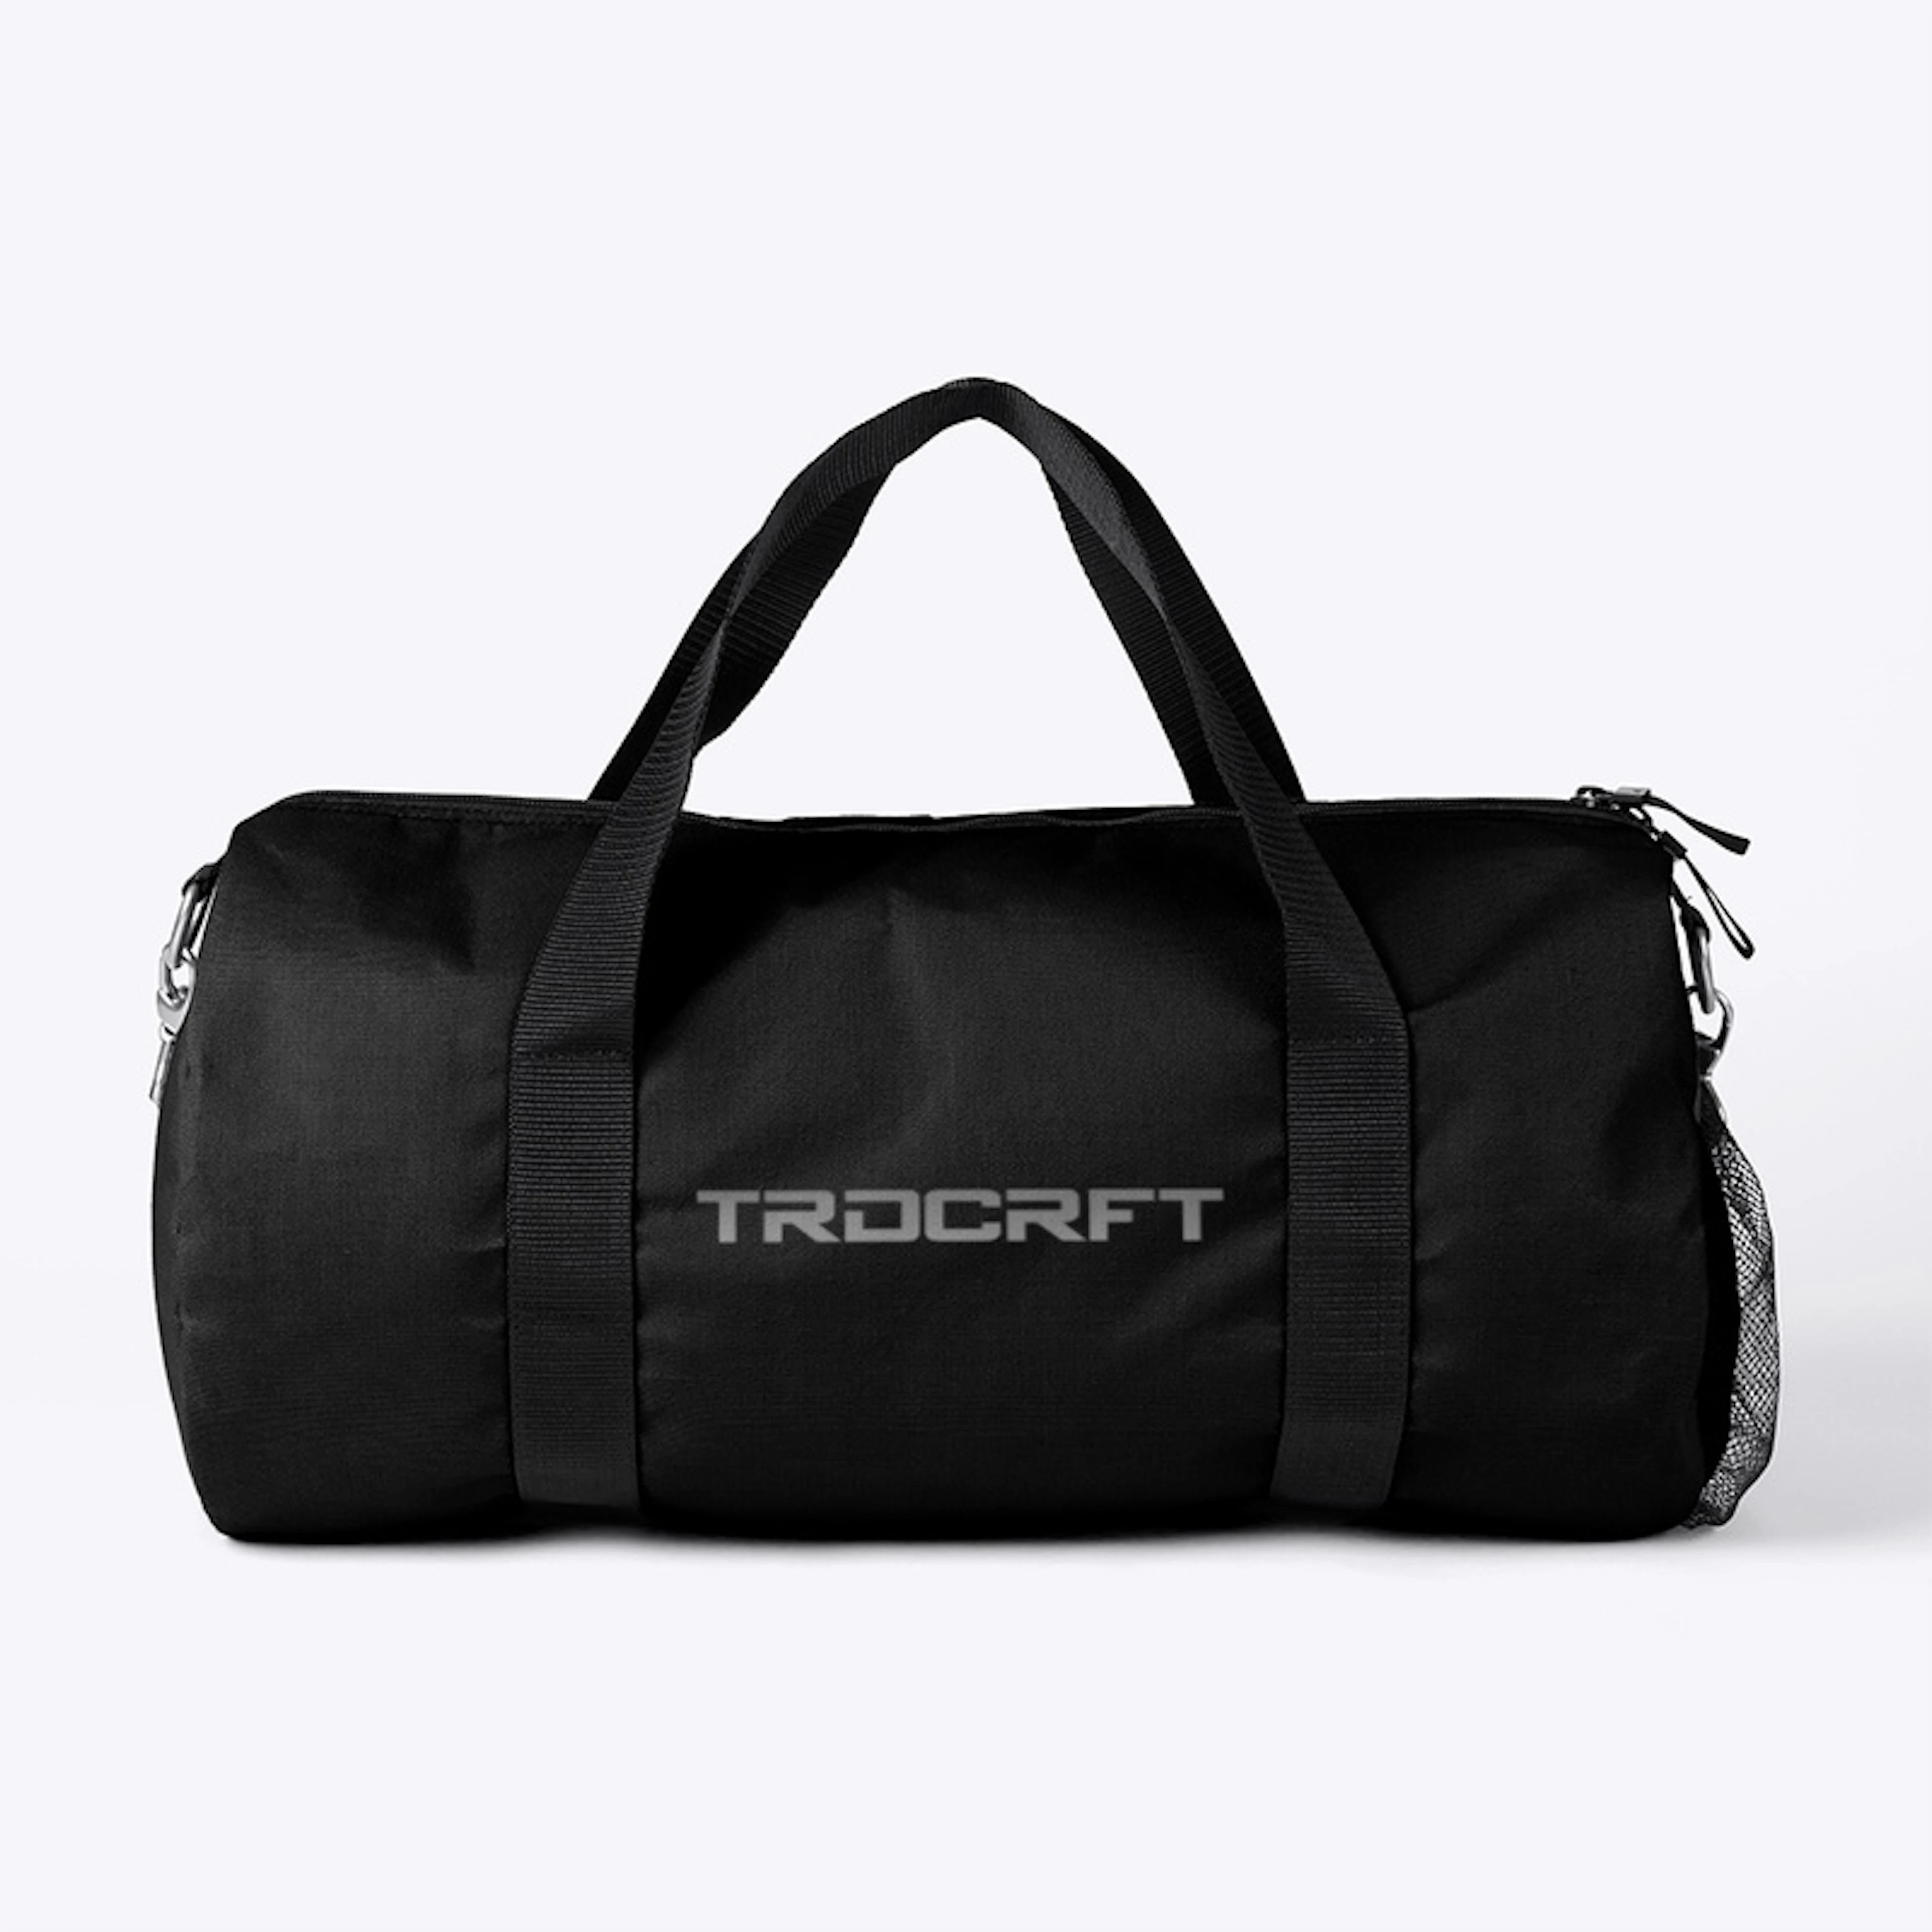 TRDCRFT Brand Duffle Bag